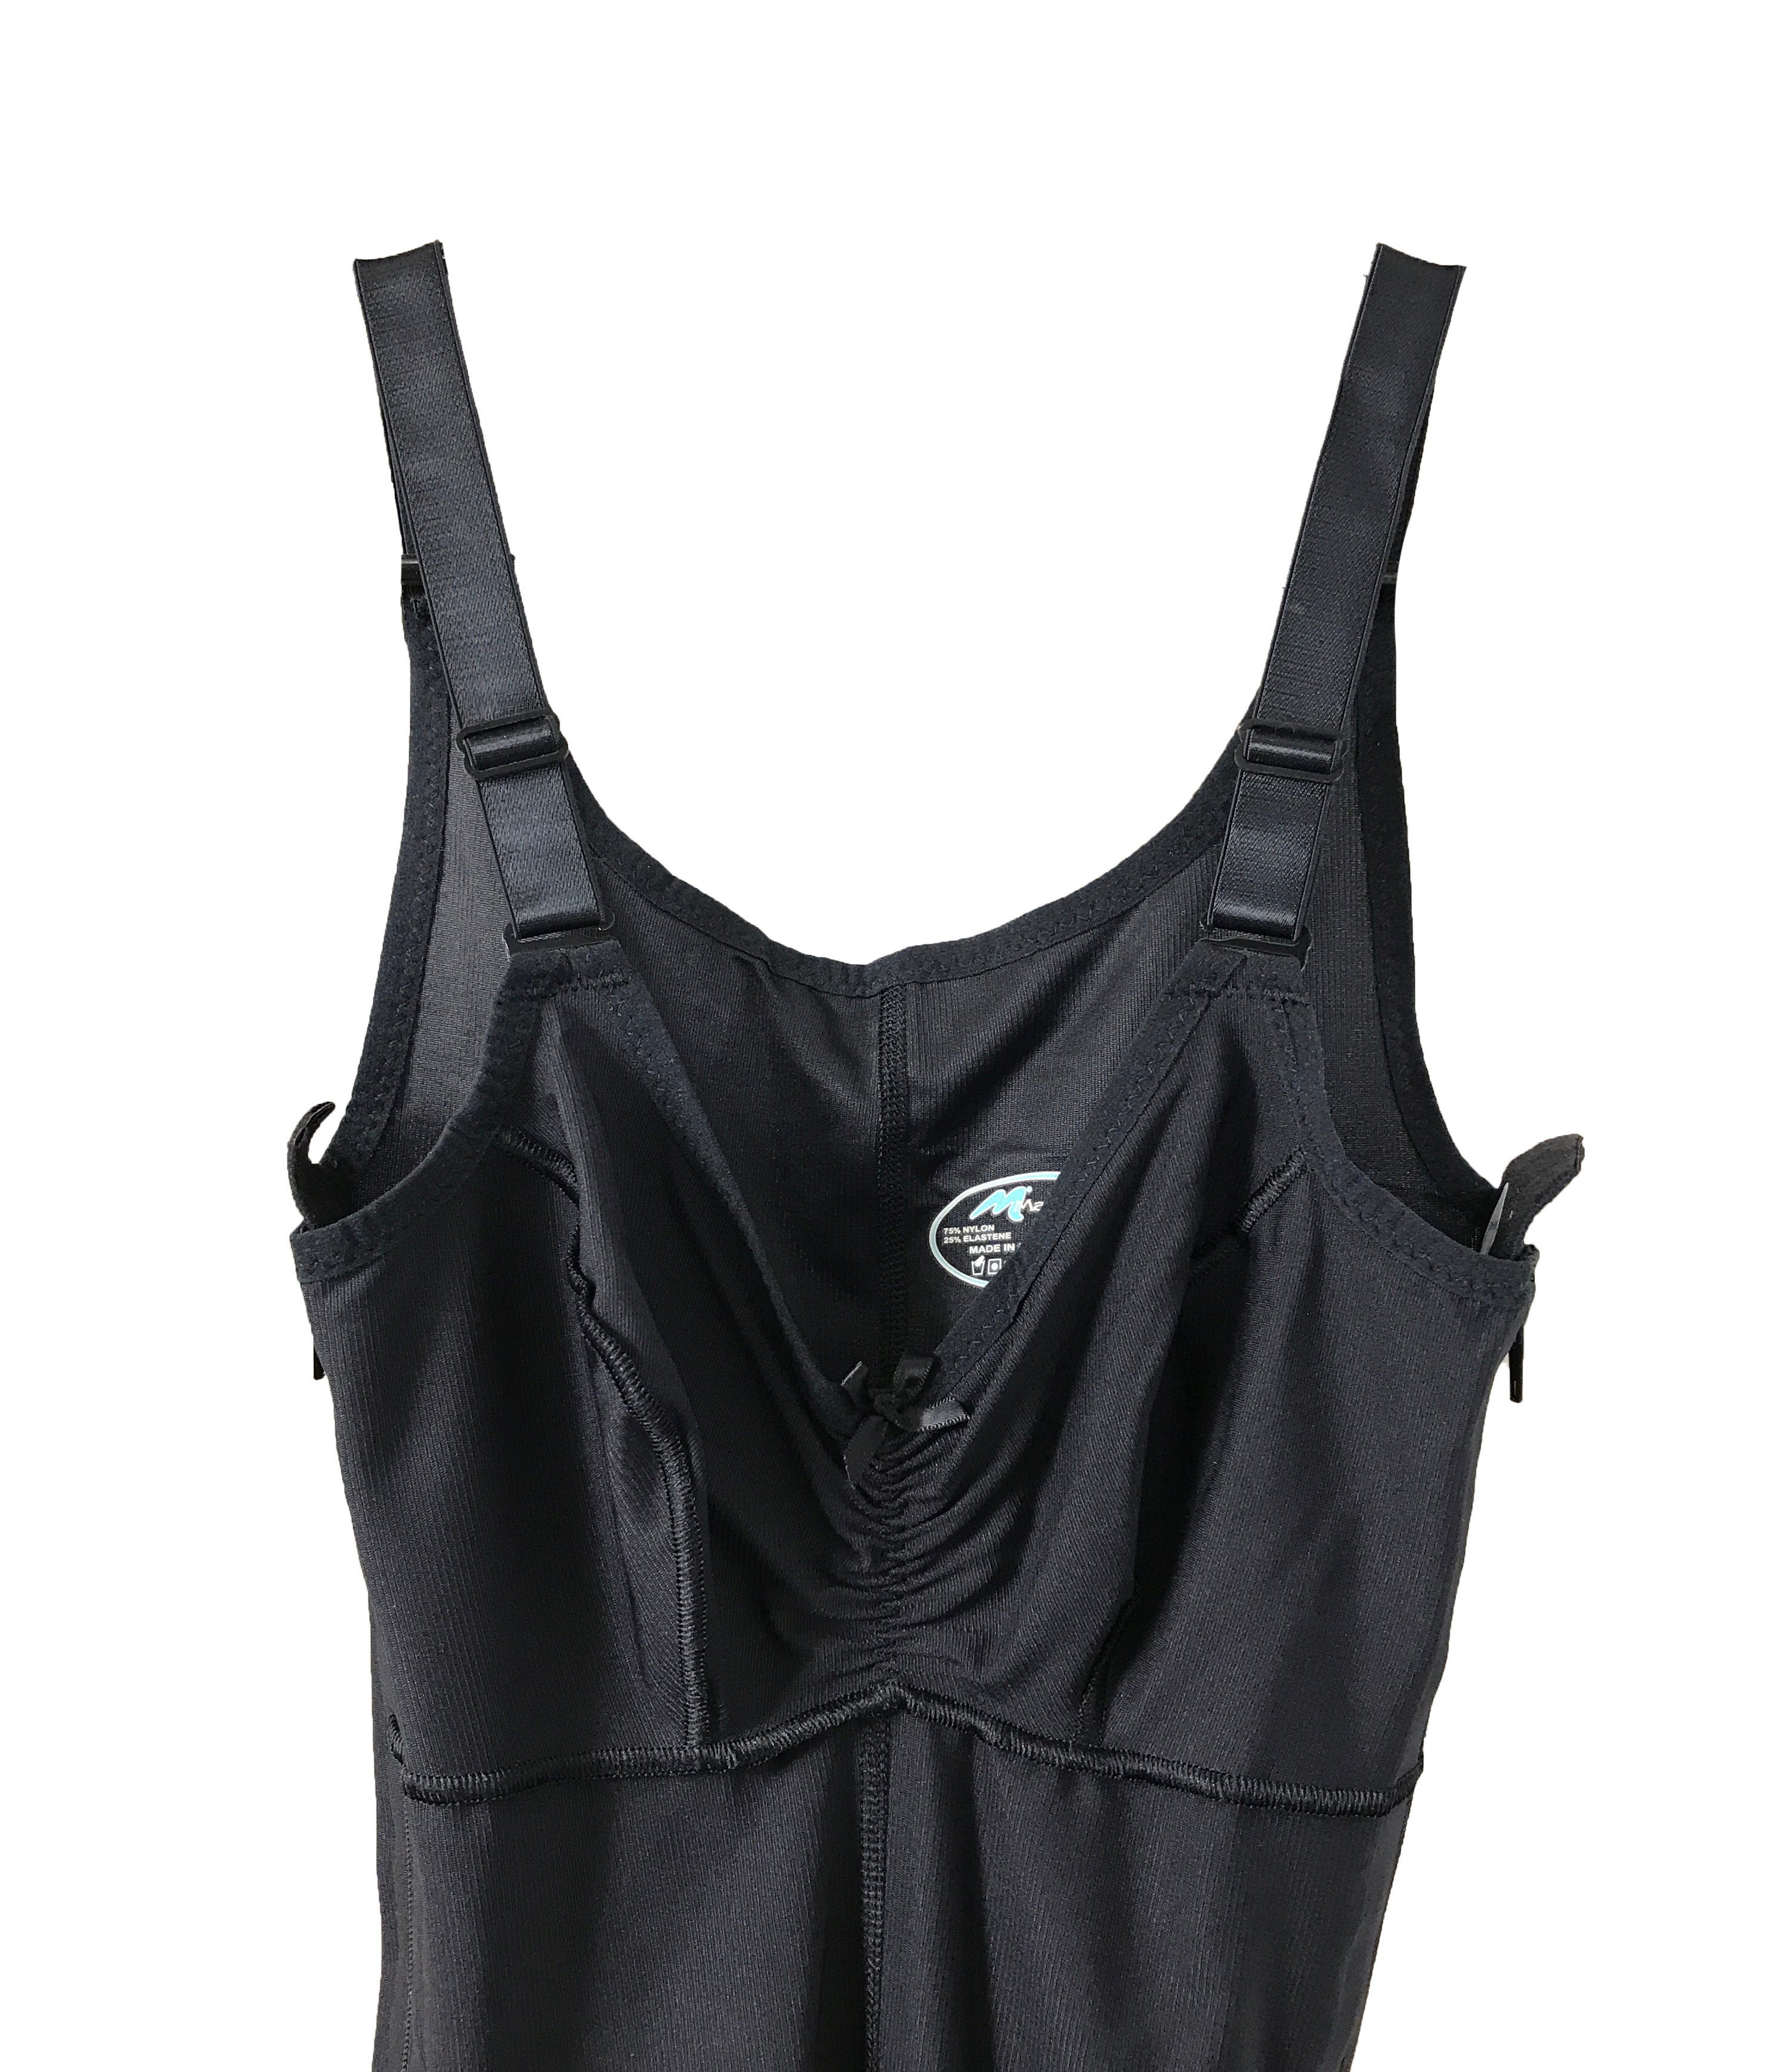 Marena ComfortWear Compression and Support Garment Black Bodysuit Women's Size M